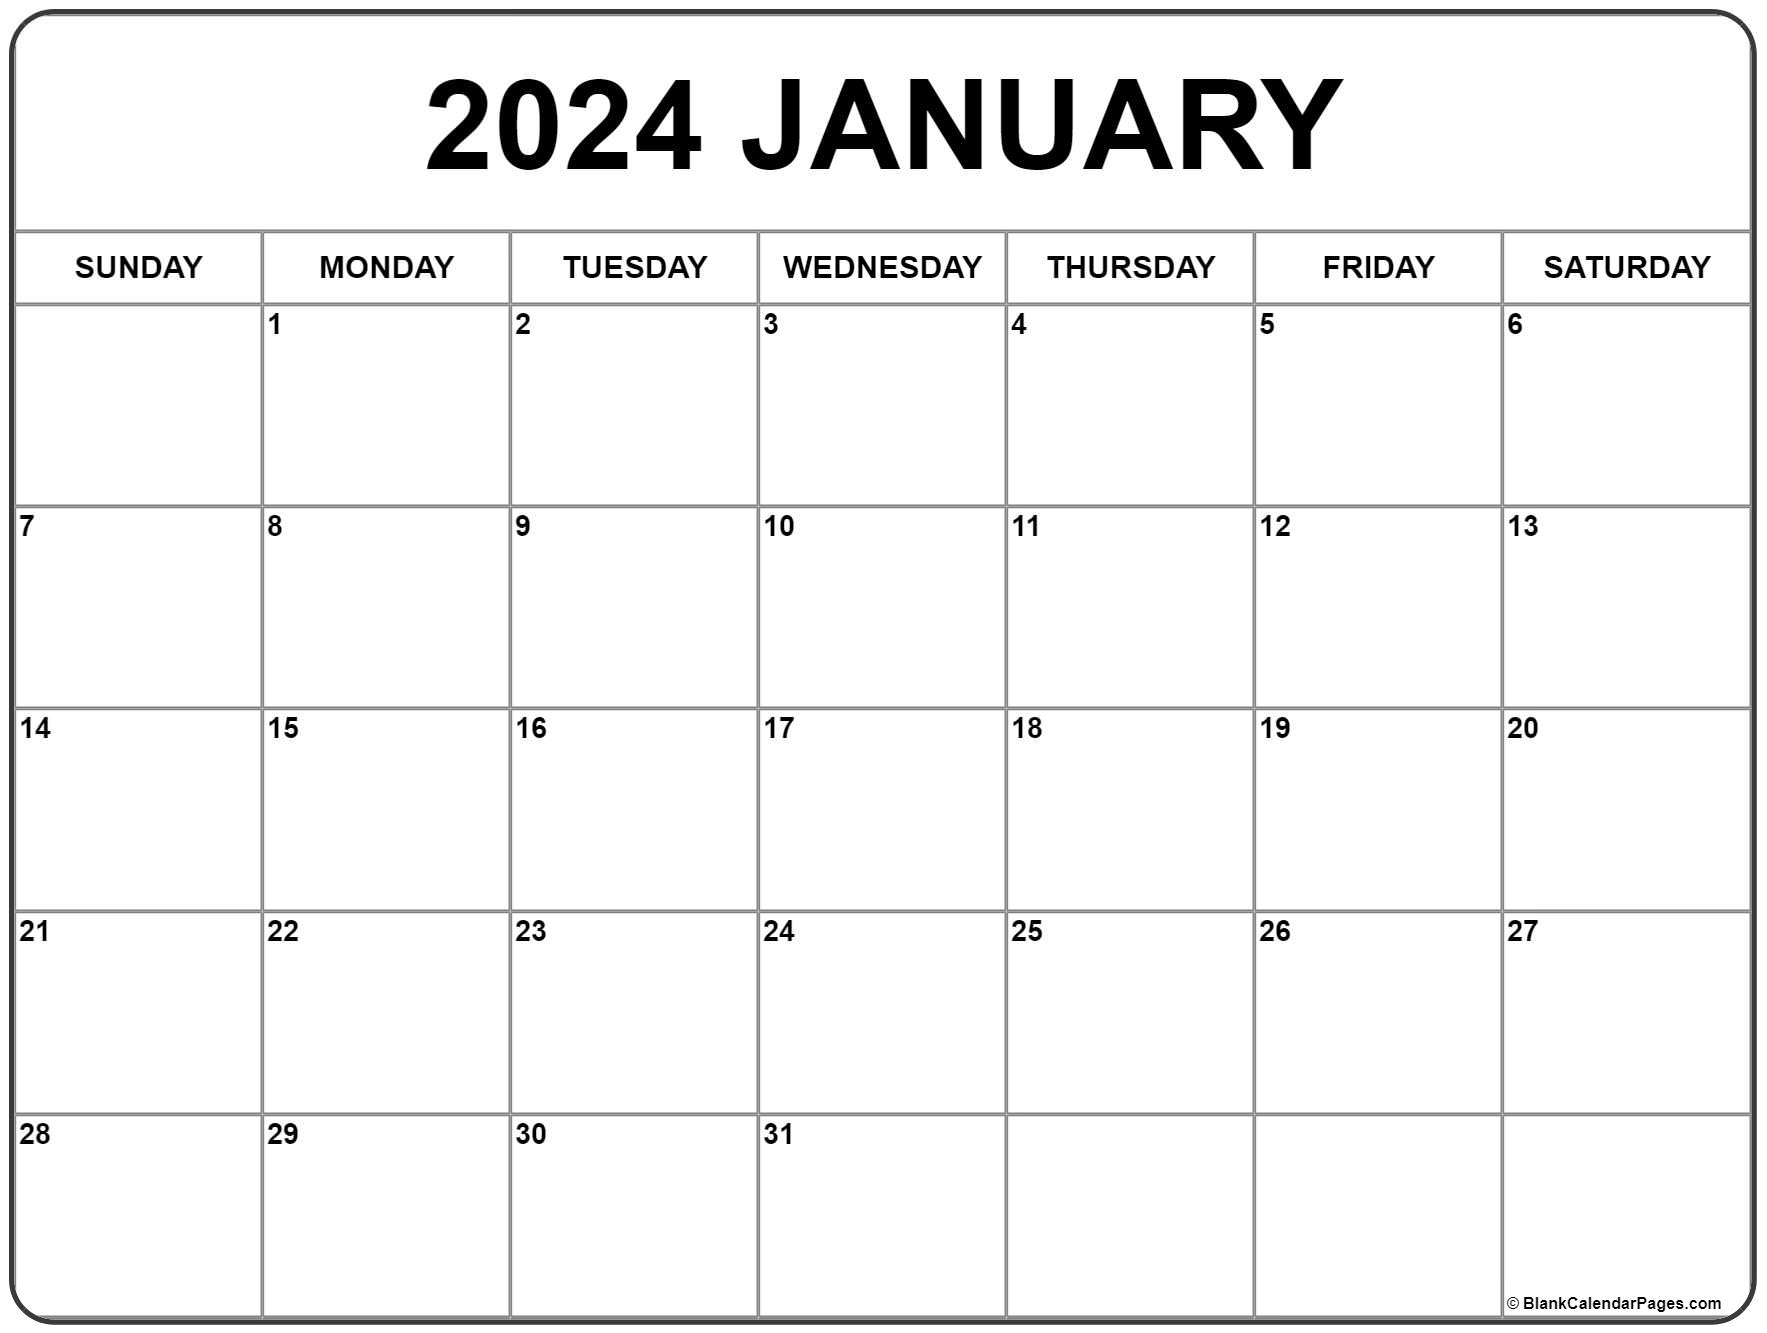 January 2024 Calendar | Free Printable Calendar | Year 2024 January Calendar